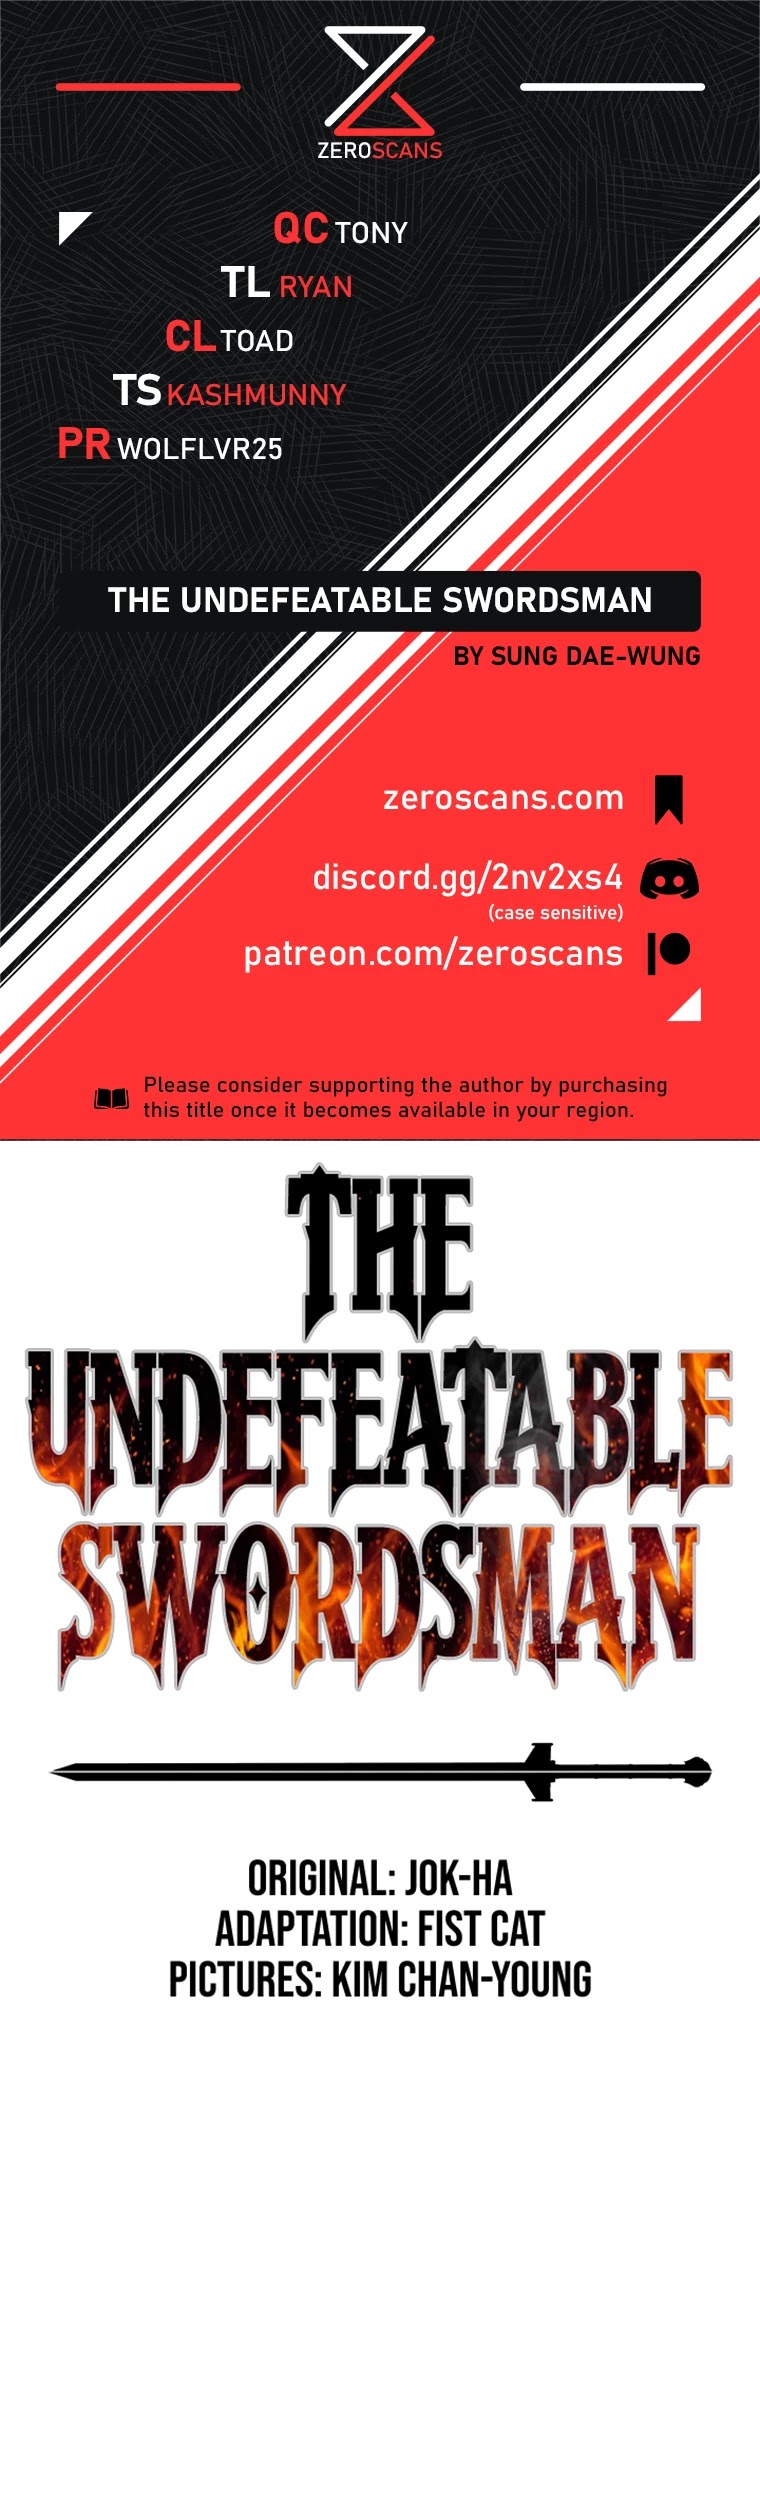 The Undefeatable Swordsman, read The Undefeatable Swordsman, The Undefeatable Swordsman manga, The Undefeatable Swordsman manhwa, the undefeatable swordsman raw, the undefeatable swordsman 68, the undefeatable swordsman 66, the undefeatable swordsman 48, the undefeatable swordsman mangadex, the undefeatable swordsman mangakakalot, the undefeatable swordsman wiki, the undefeatable swordsman novel, the undefeatable swordsman chapter 38, the undefeatable swordsman chapter 1, the undefeatable swordsman 65, the undefeatable swordsman 43, the undefeatable swordsman anime planet, the undefeatable swordsman author, the undefeatable swordsman alternative, the undefeatable swordsman arabic, the undefeatable swordsman alternative name, the undefeatable swordsman azora, the invincible swordsman all episodes, the undefeatable swordsman baka, the undefeatable swordsman bahasa indonesia, the undefeatable swordsman baka update